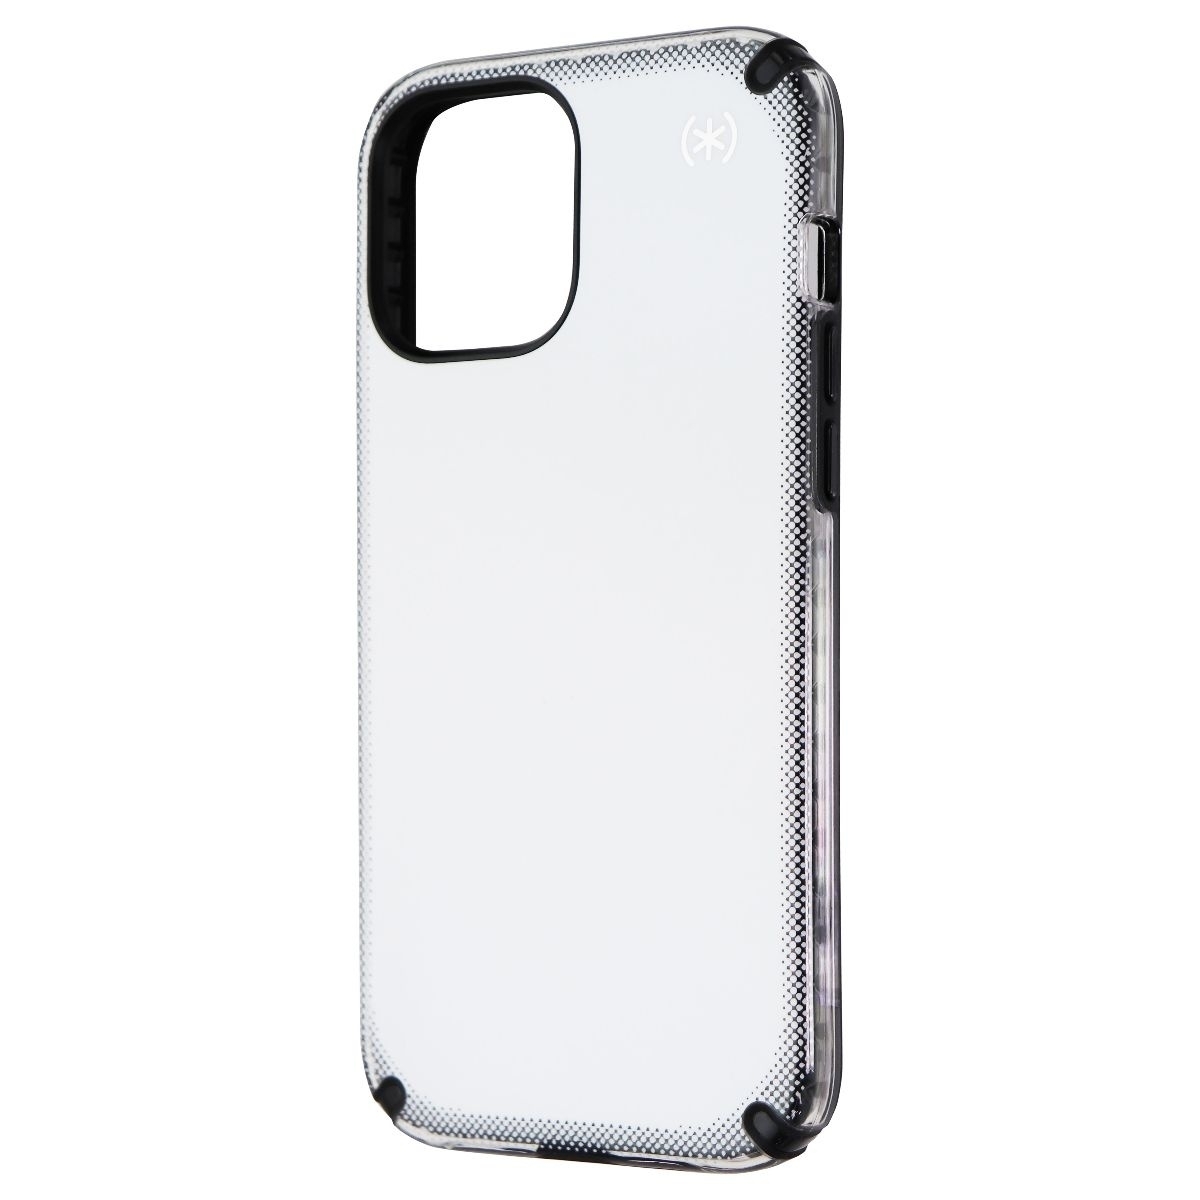 Speck Presidio2 Armor Cloud Case For Apple IPhone 12 Pro Max - White Hot